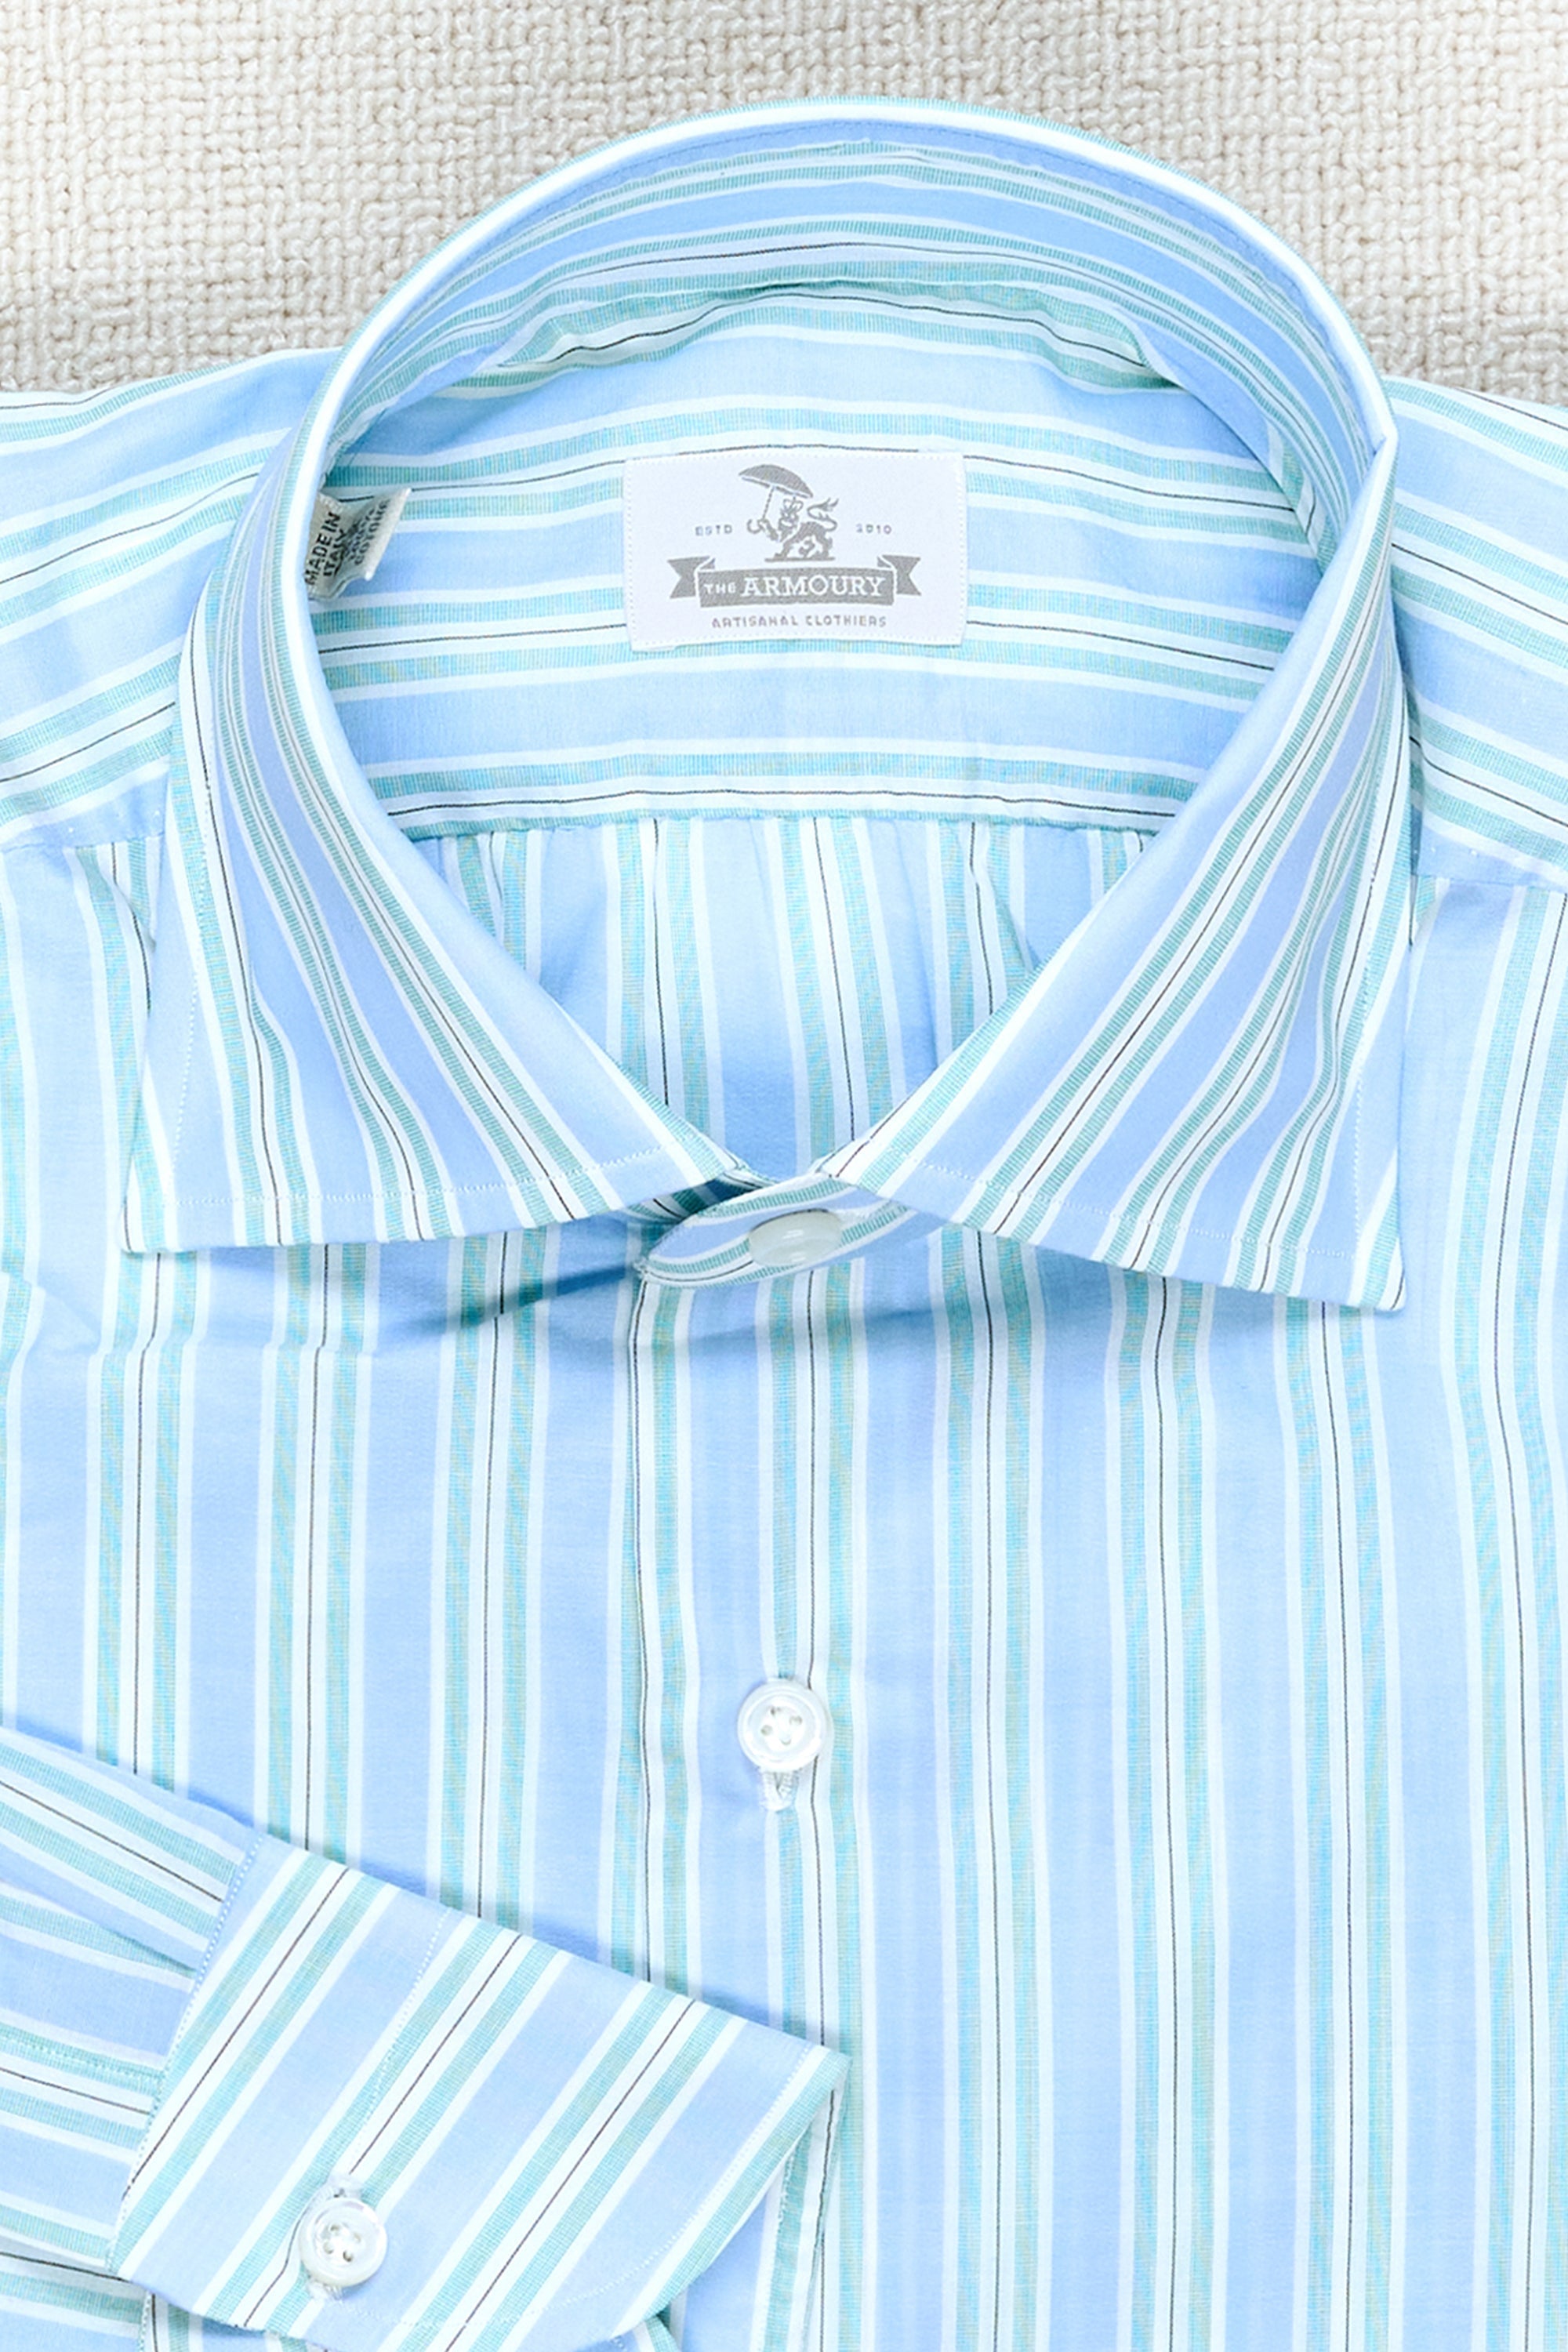 The Armoury Carlo Riva Blue with Green Stripe Poplin Cotton Spread Collar Shirt